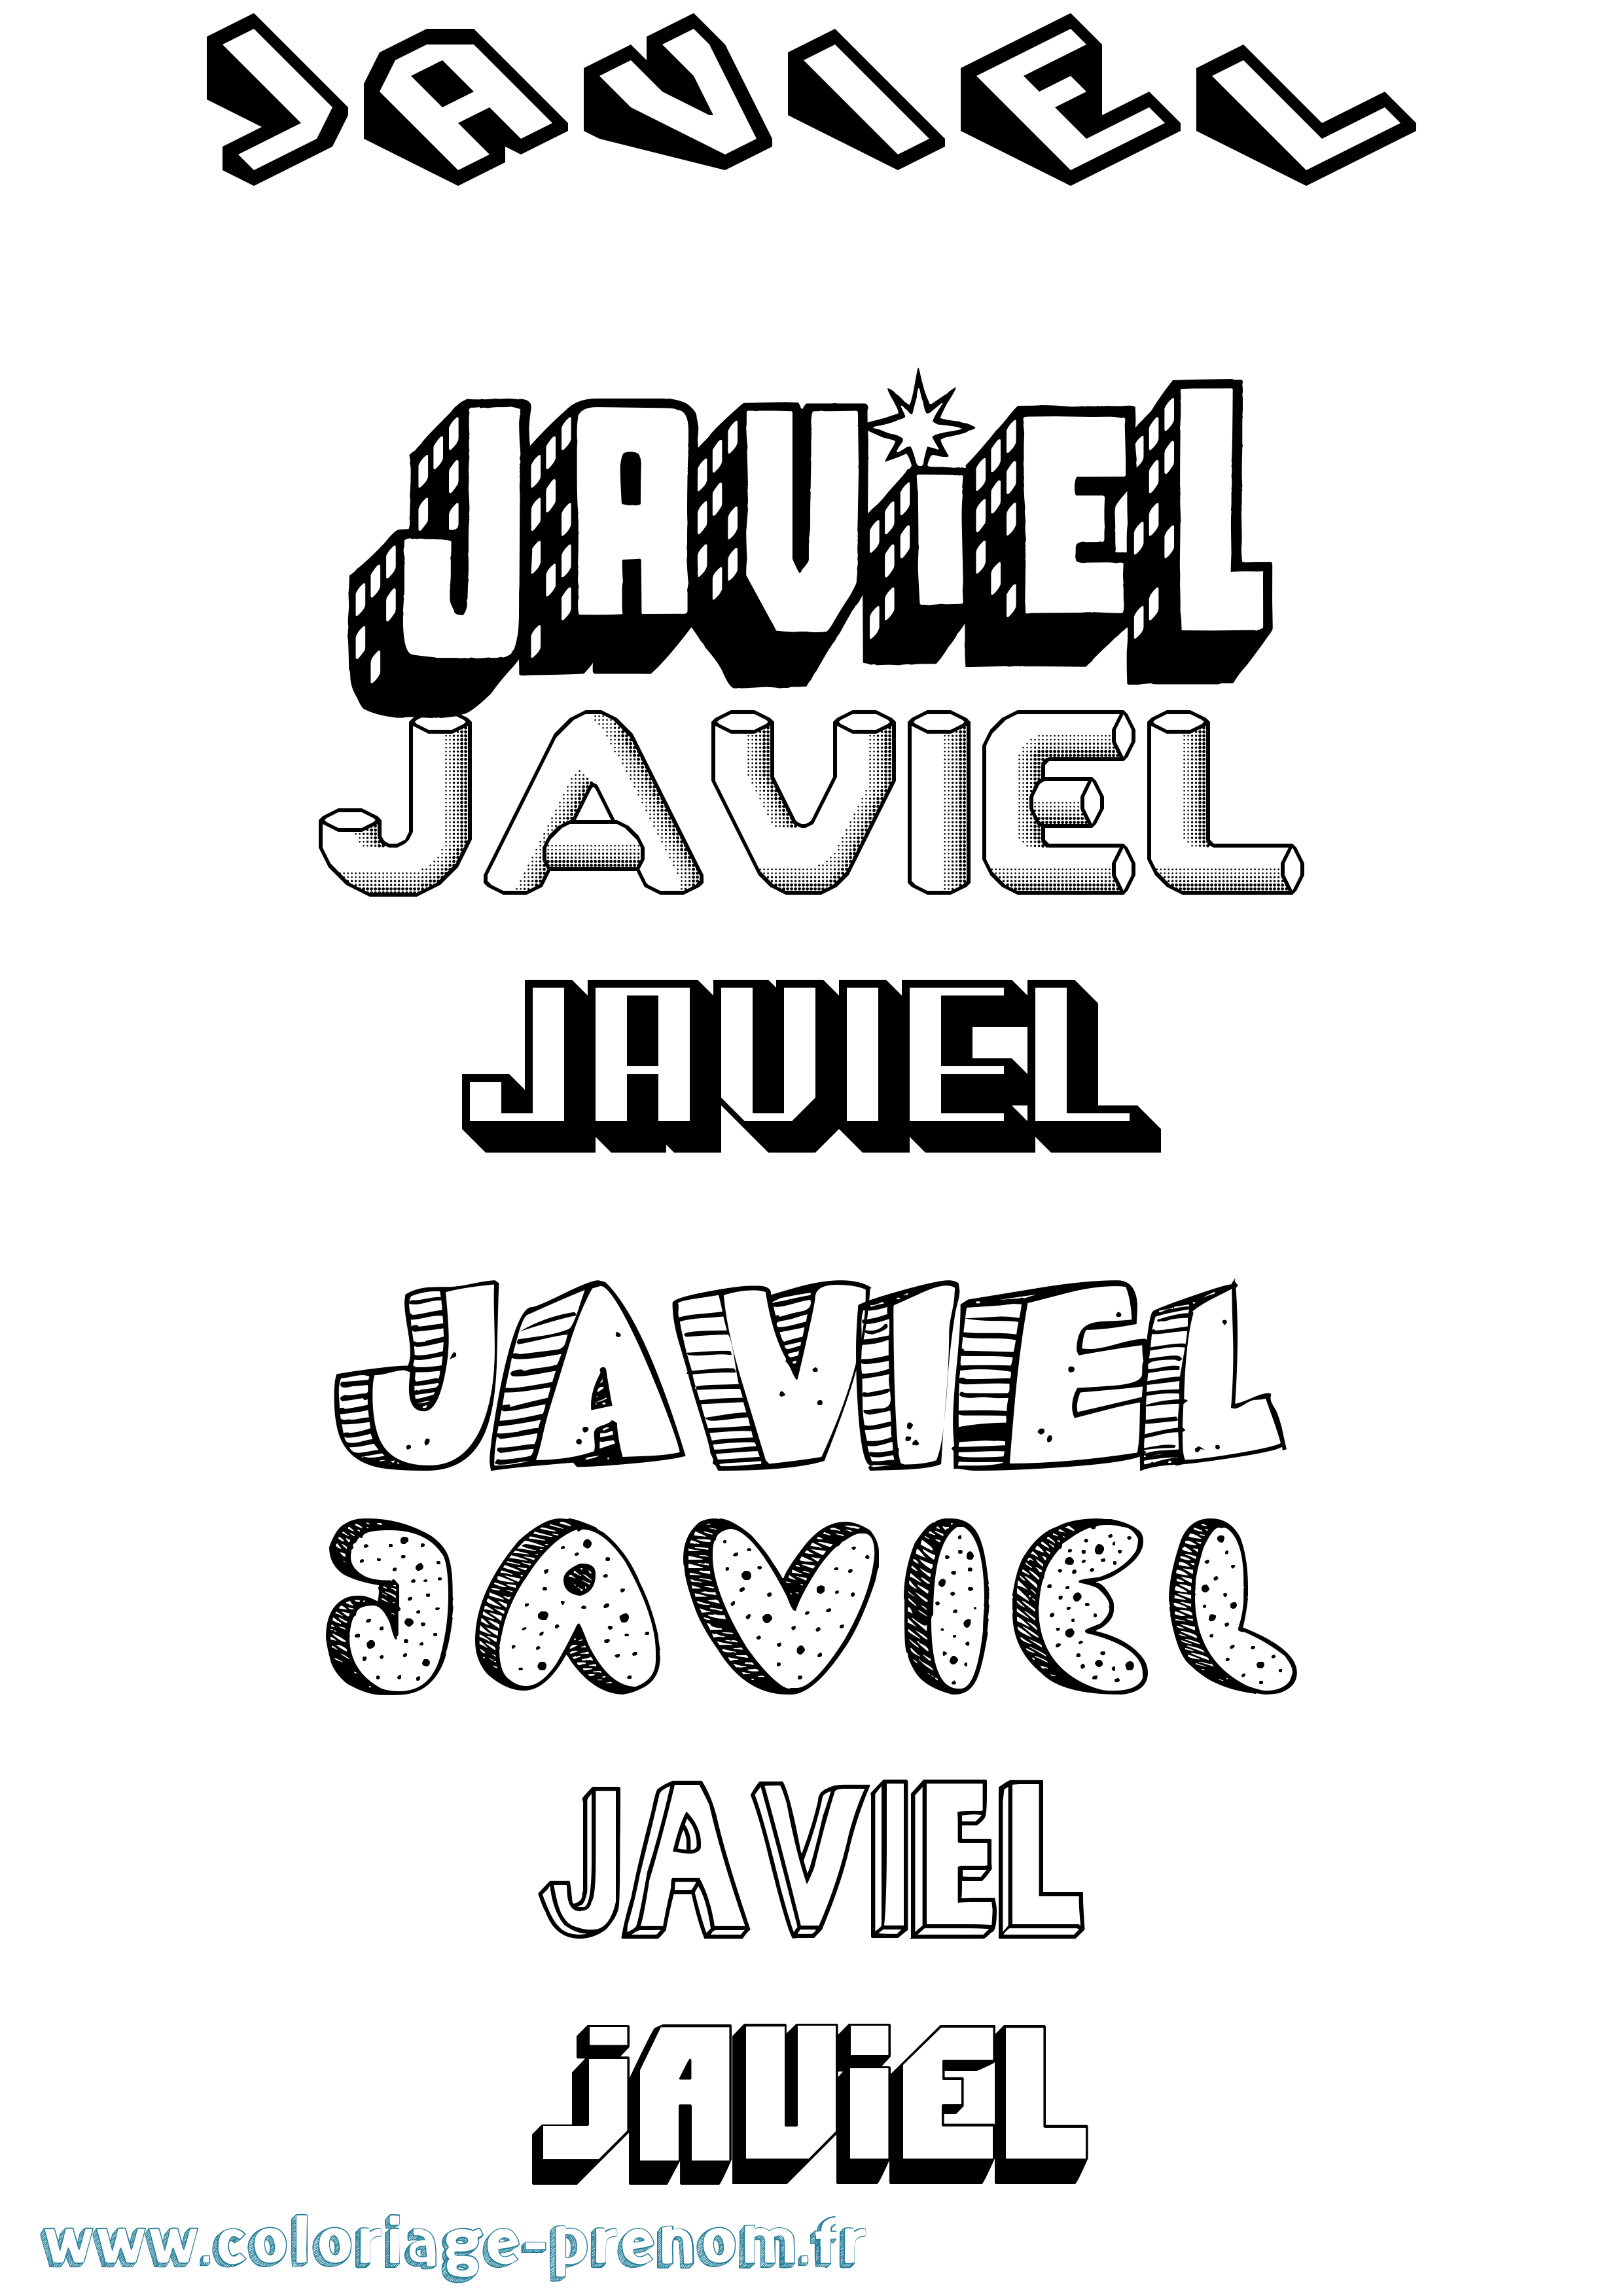 Coloriage prénom Javiel Effet 3D